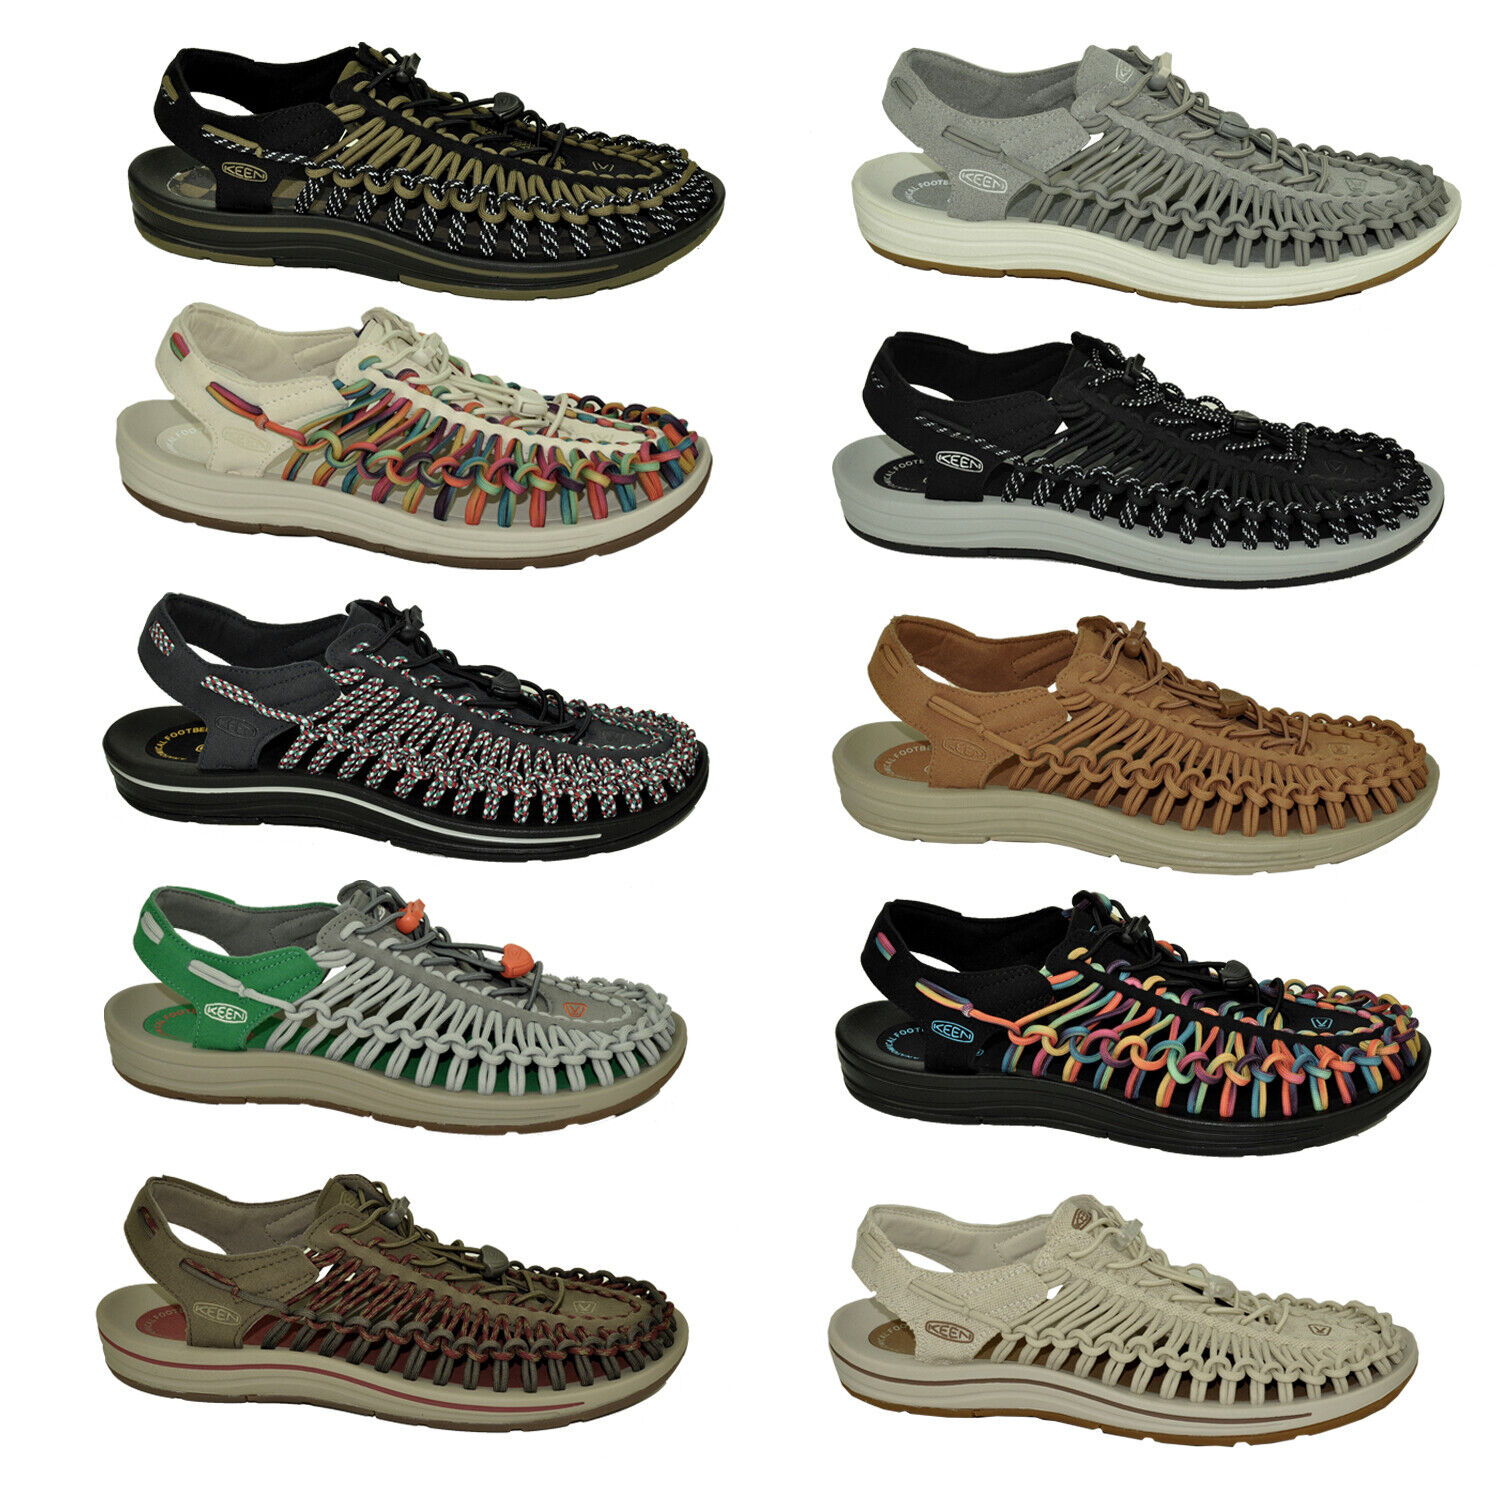 KEEN Uneek Sandalen Trekkingsandalen Ultra Leicht Leder Canvas Herren Sneaker Modell - Farbe 1026338 - Schwarz/Olive Schuhgröße EUR 43 - UK 9 - US 10